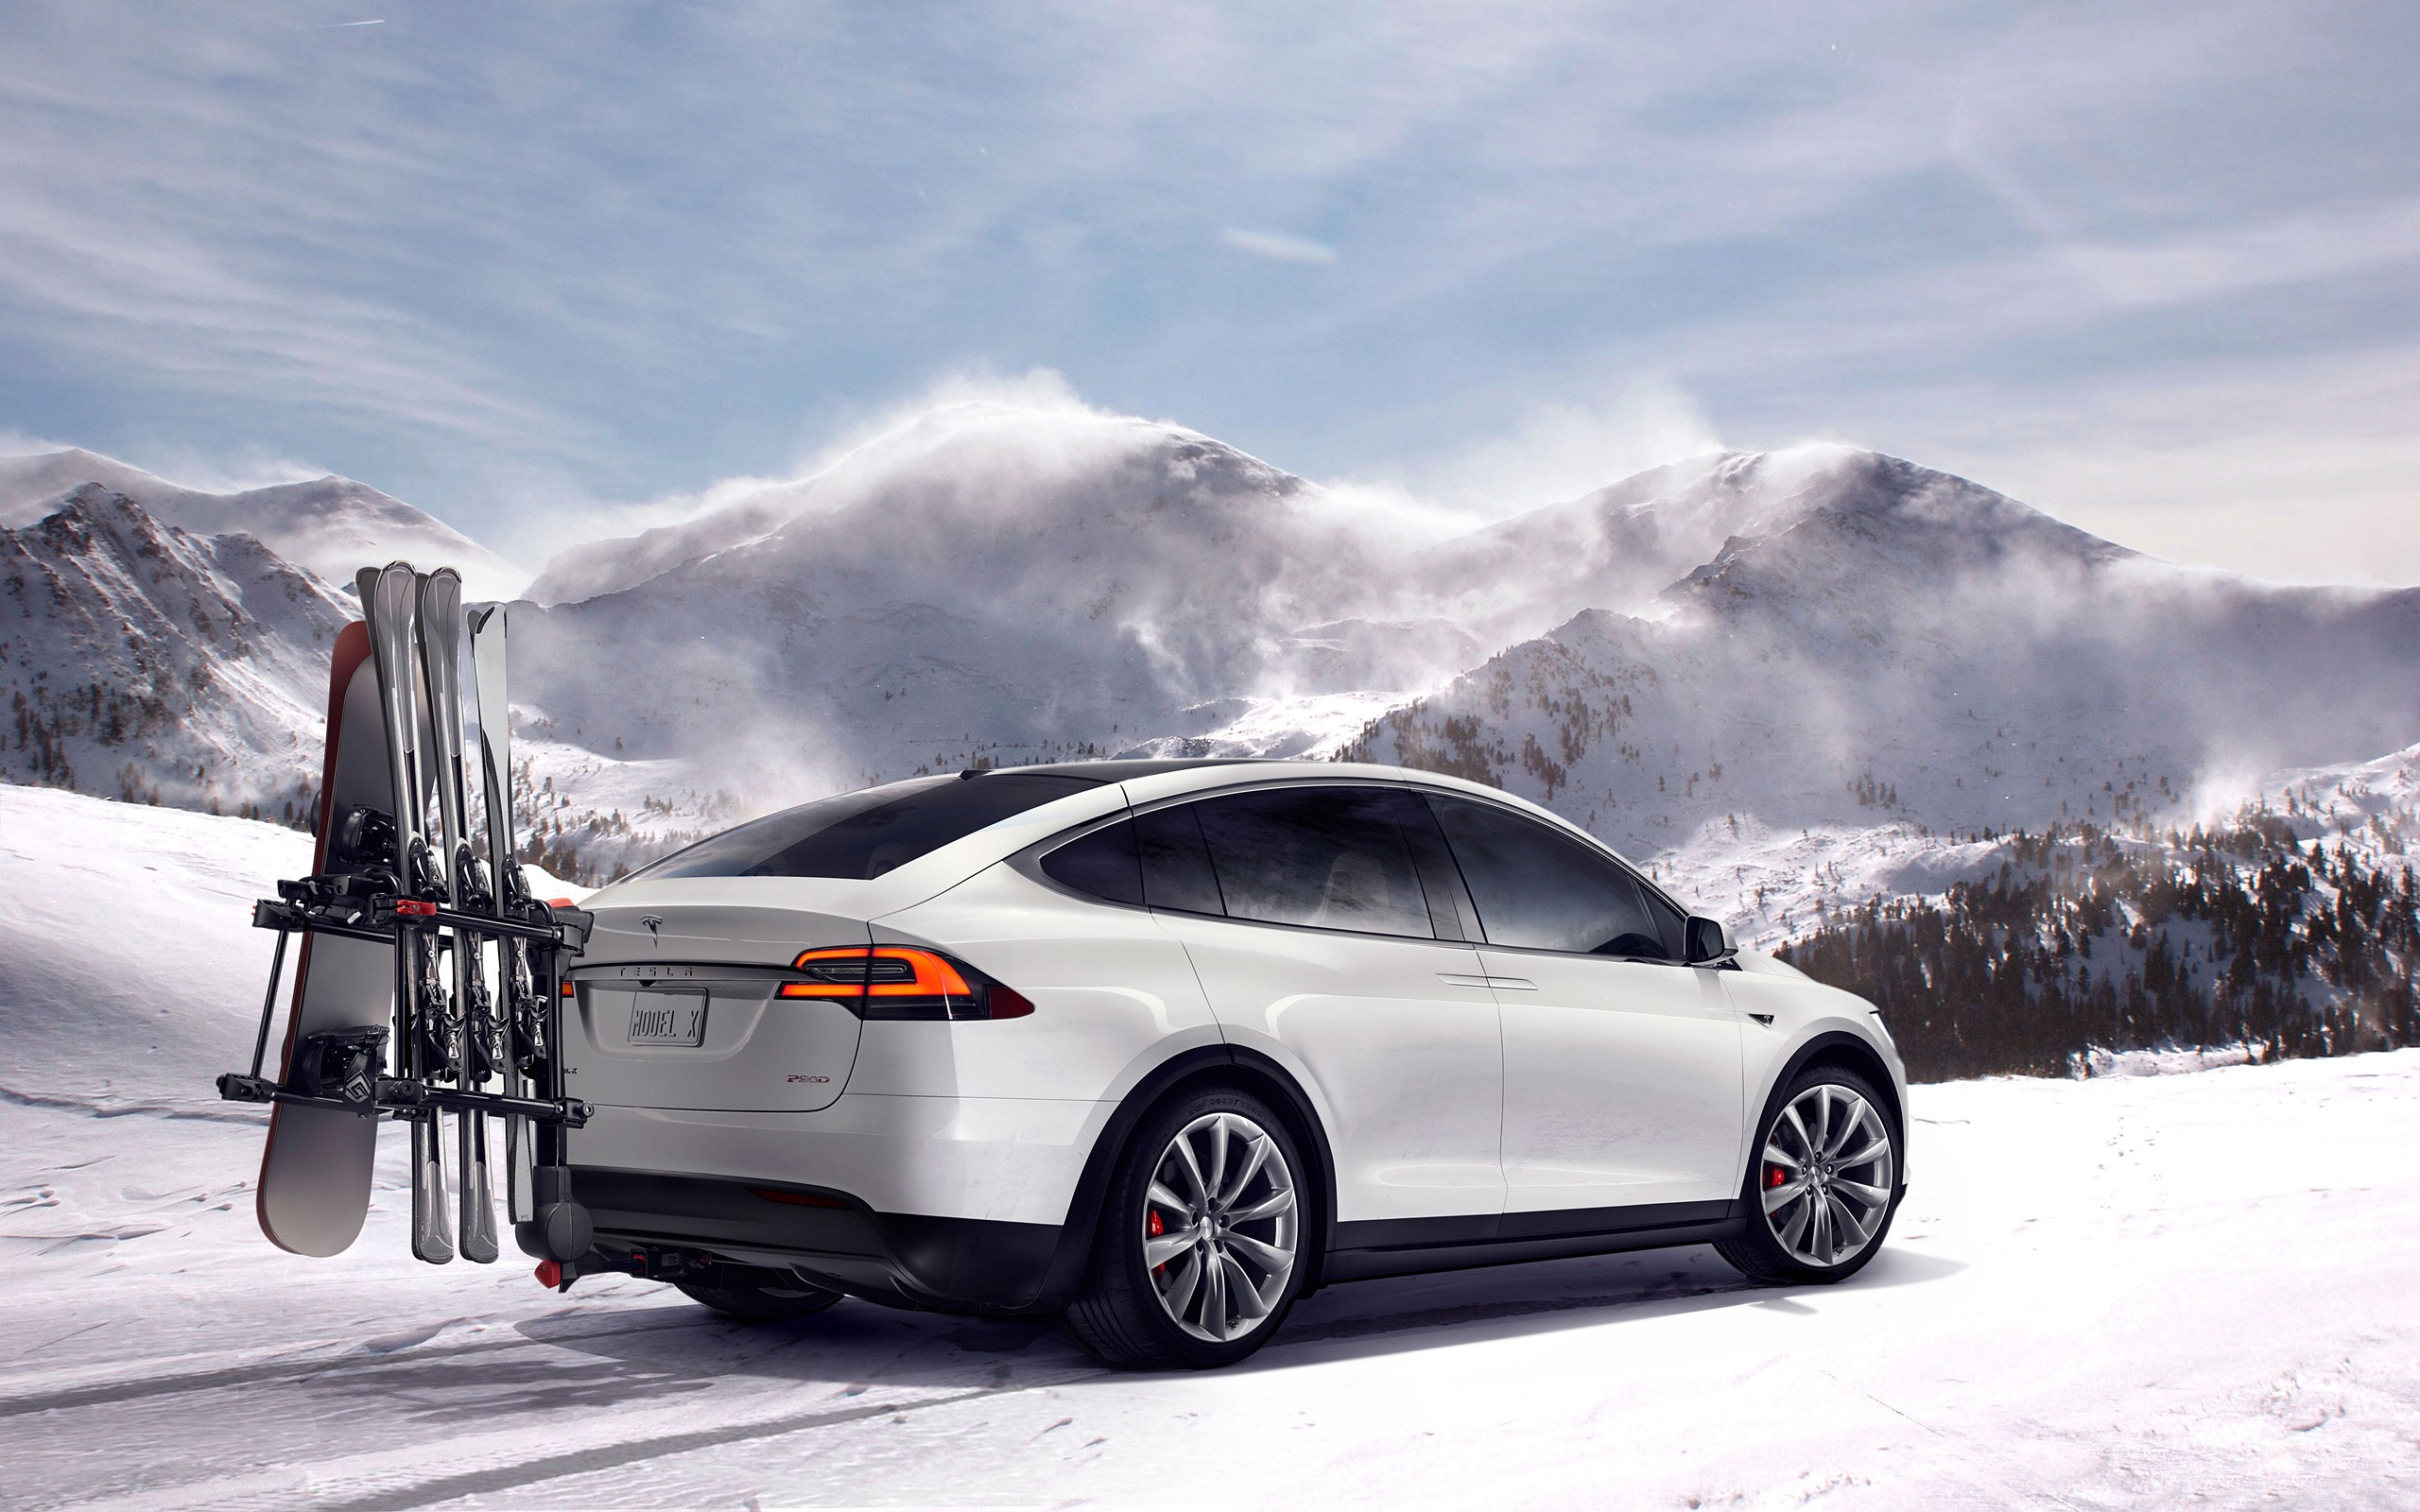 General 2560x1600 Tesla Model X car snow snowboards skis mountains Tesla winter white cars vehicle